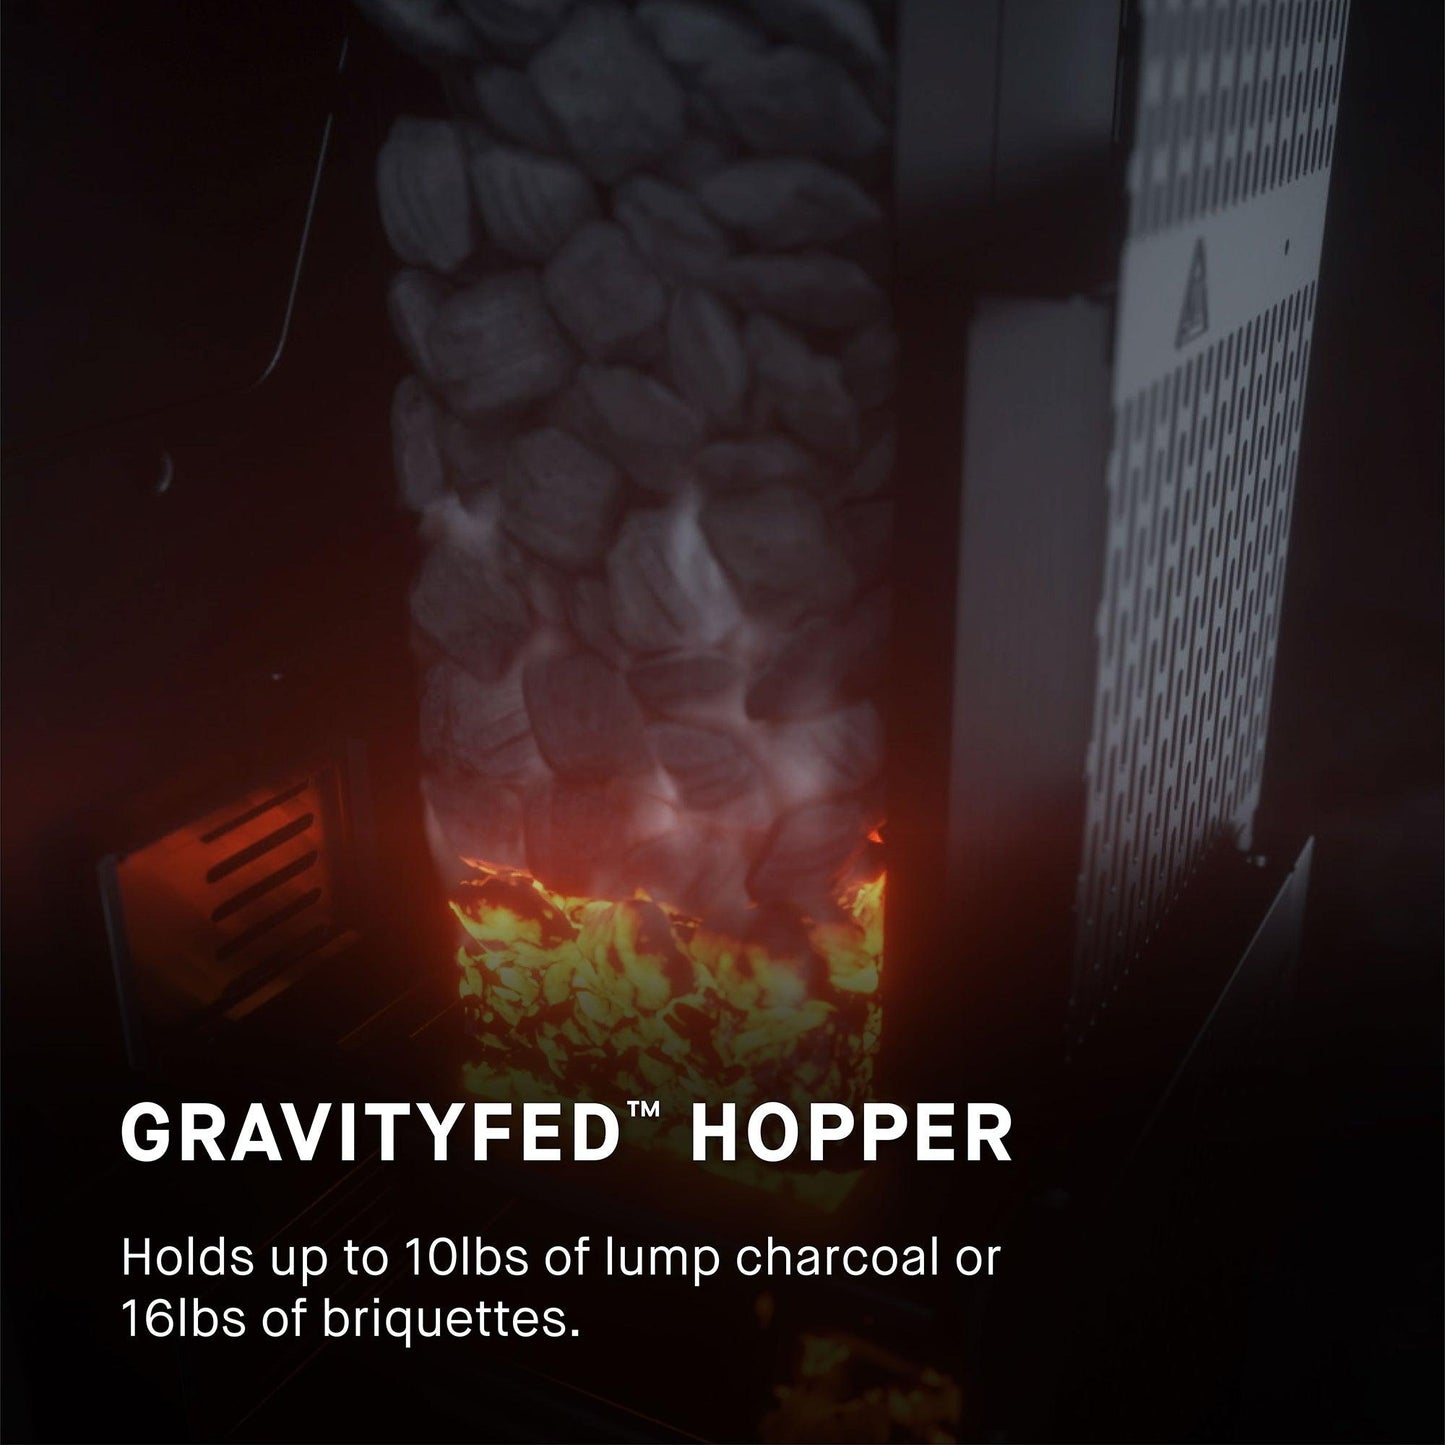 Masterbuilt Gravity Series 1050 Digital Charcoal Grill + Smoker - BBQ Land